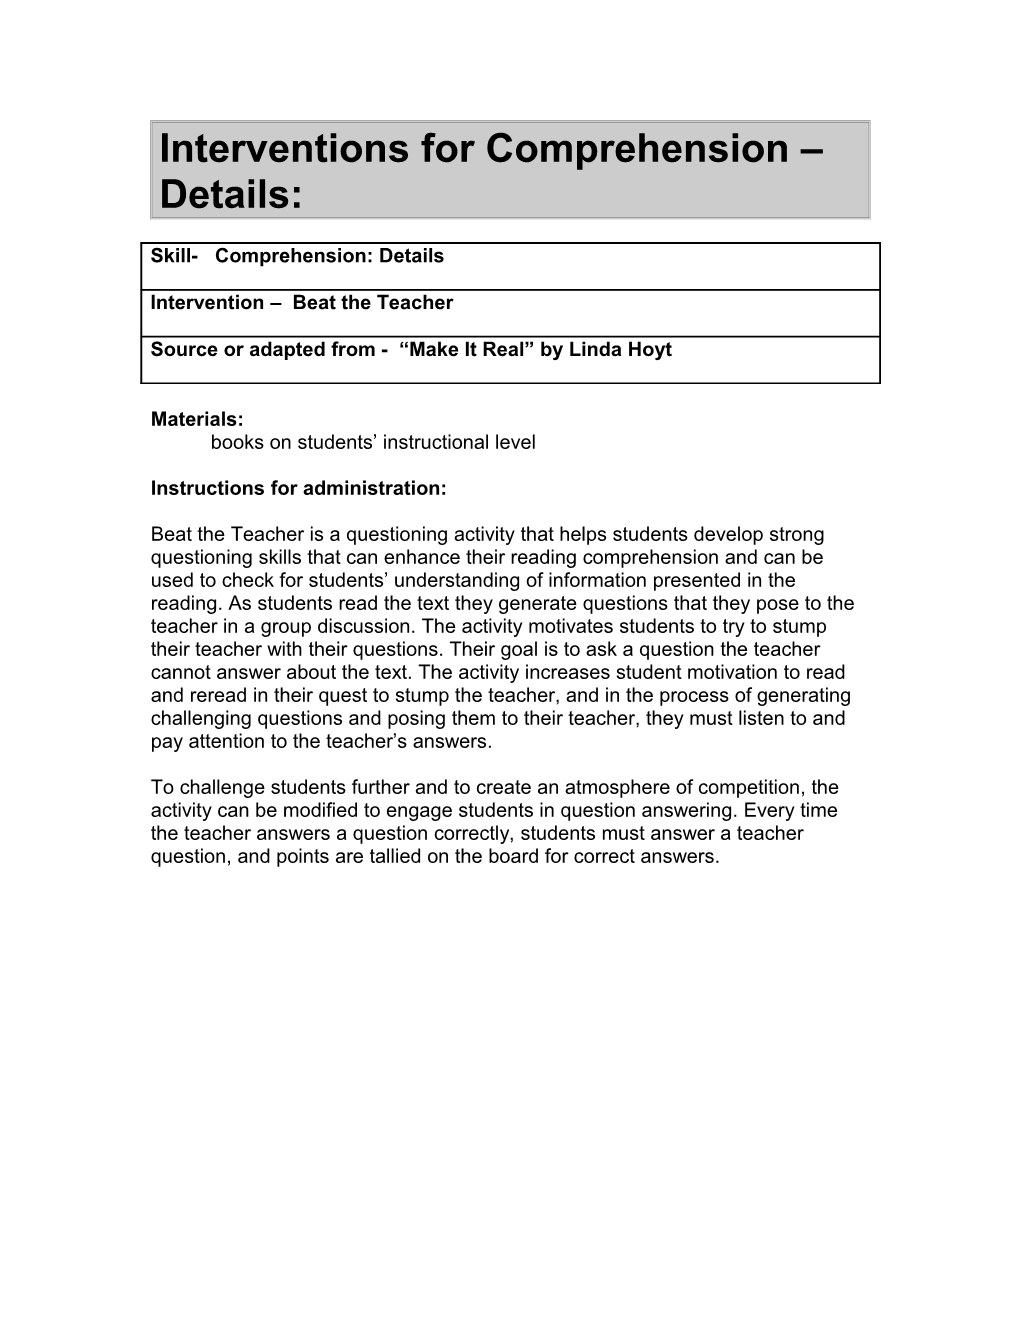 Interventions for Comprehension Details